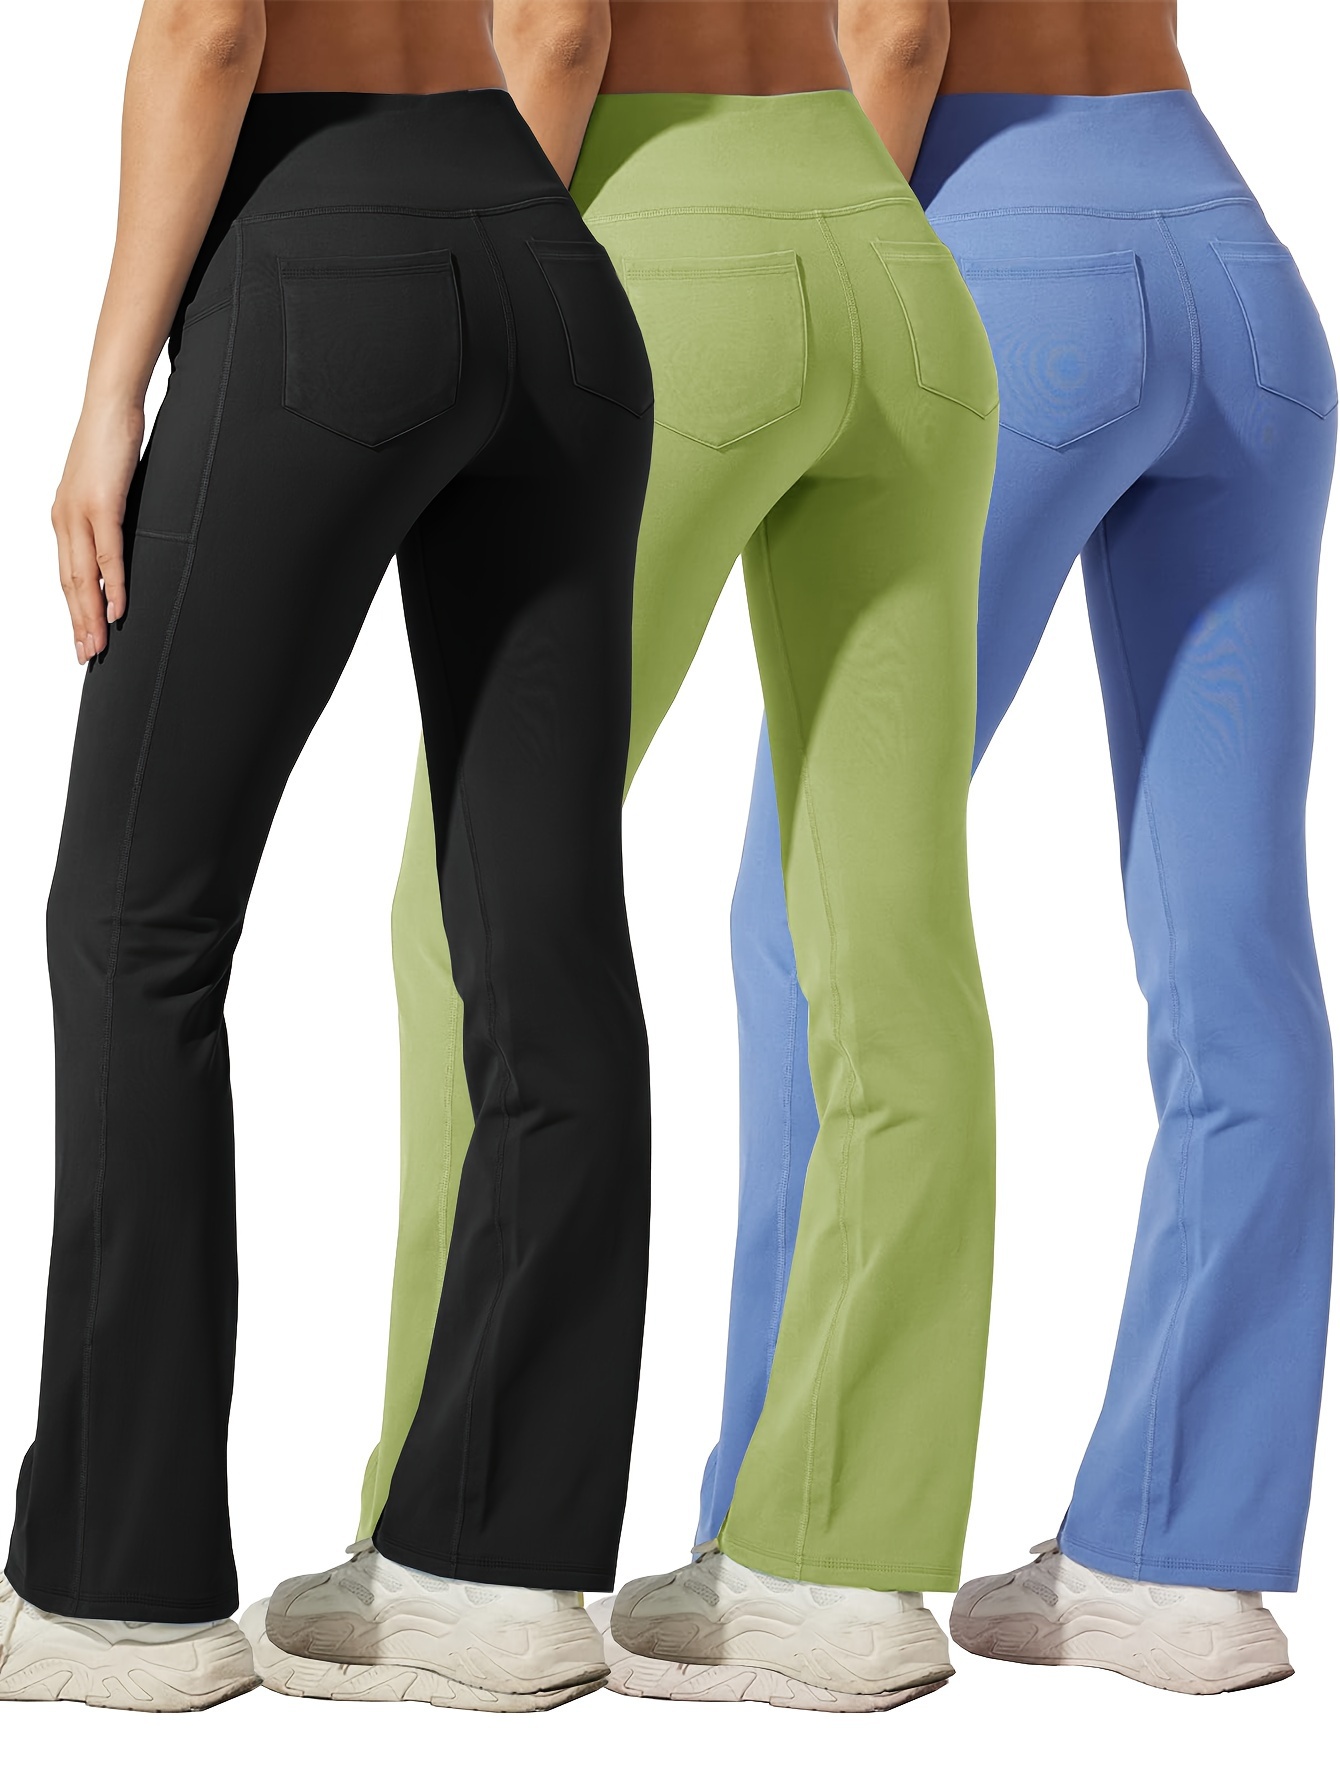 Plus Size Pocket Yoga Pants Women Solid Fitness Sports Leggings